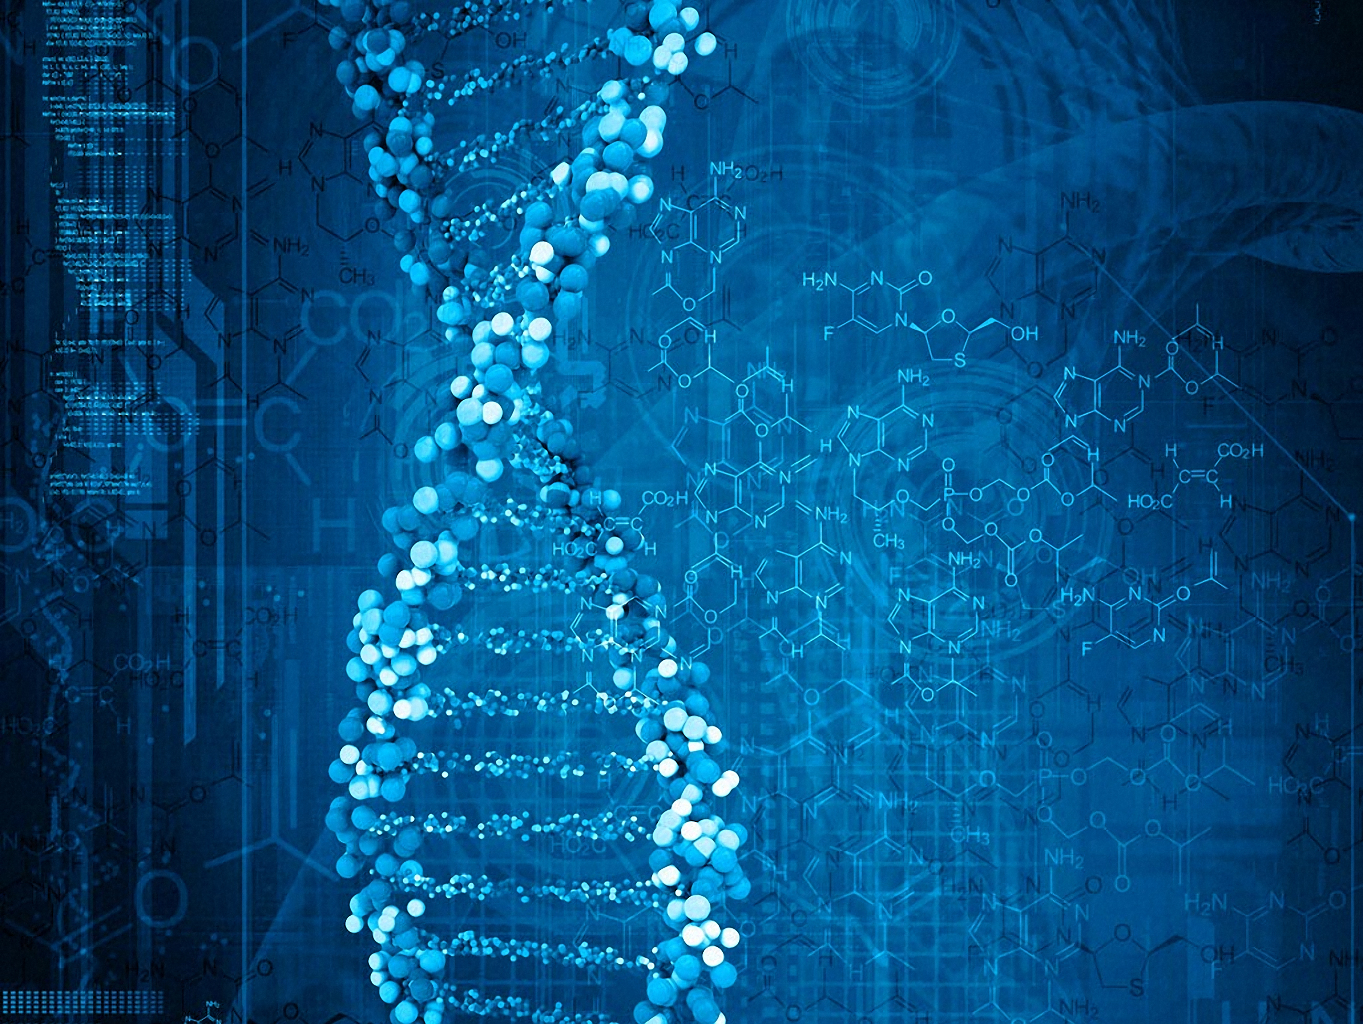 DNA Wallpaper High Resolution 1080P - Bing images